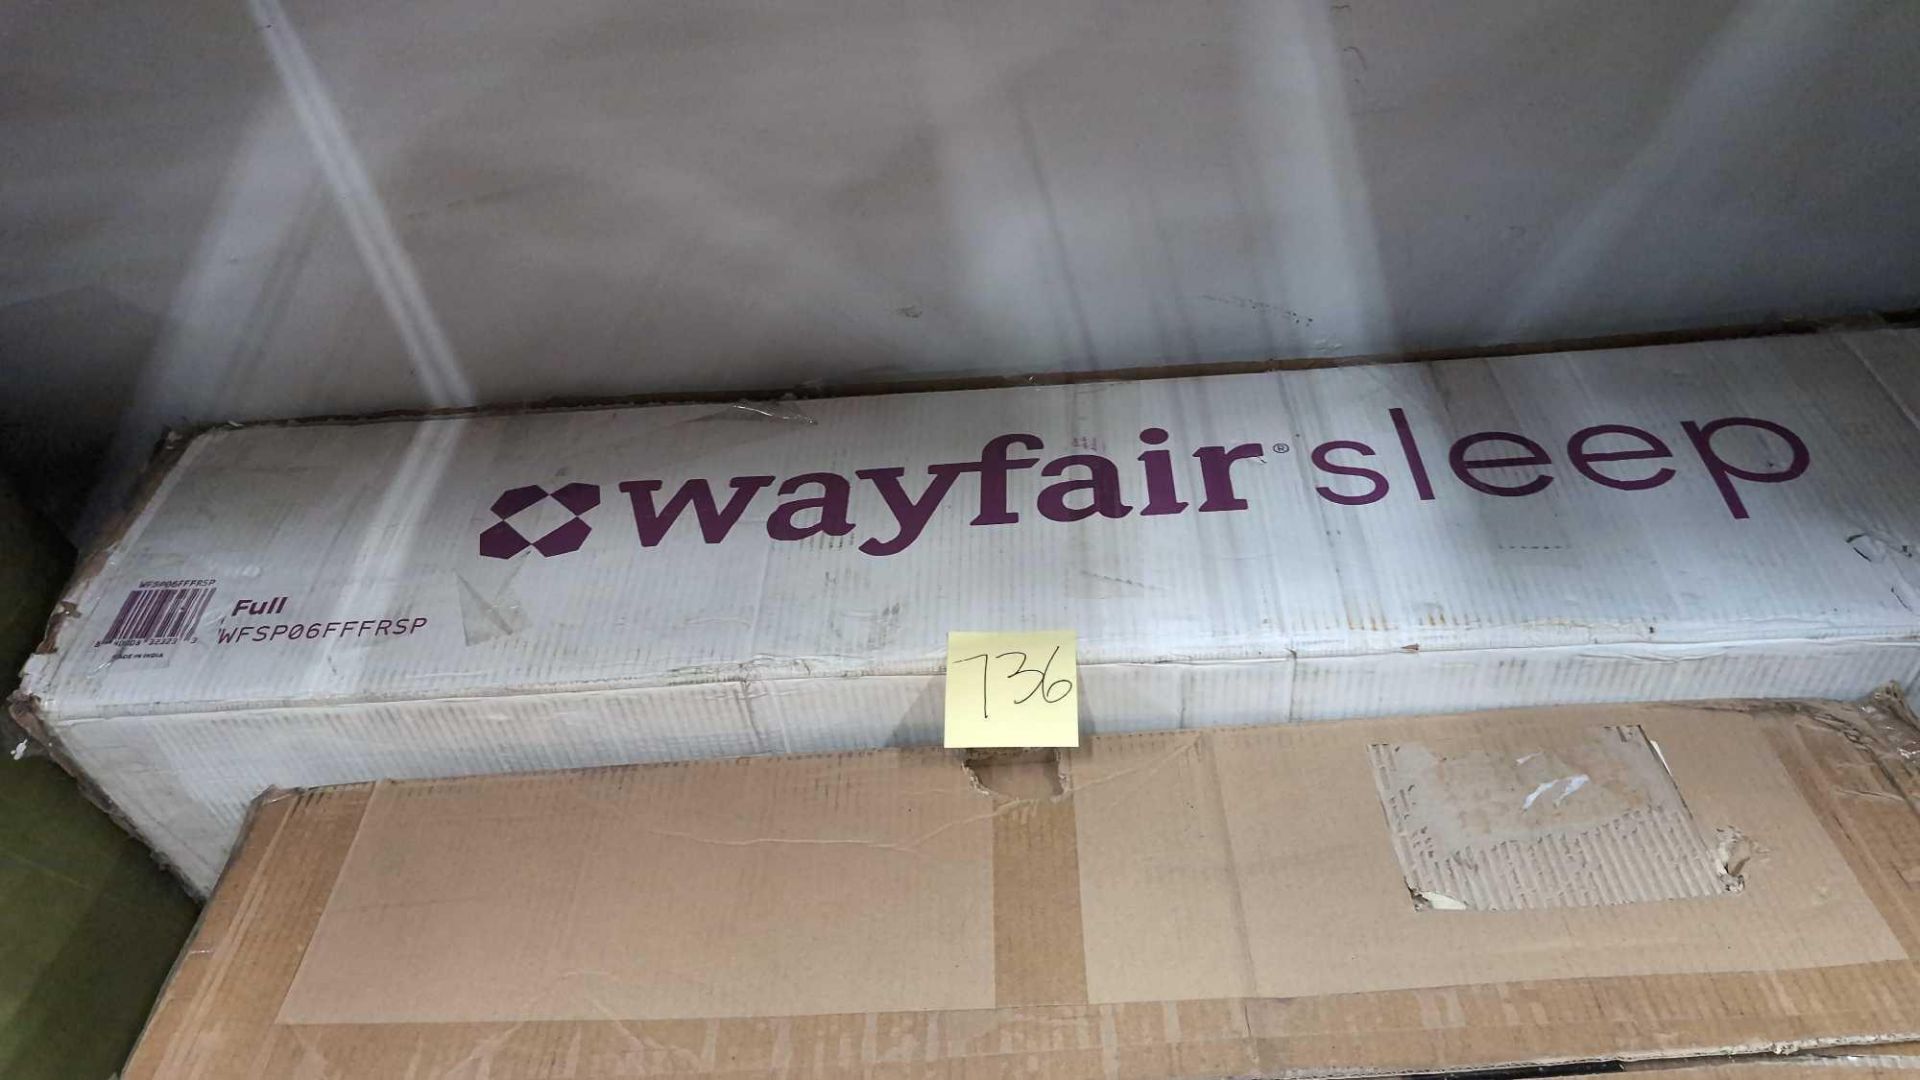 inflatable item, Wayfair sleep, deco home sound bar subwoofer - Image 3 of 5